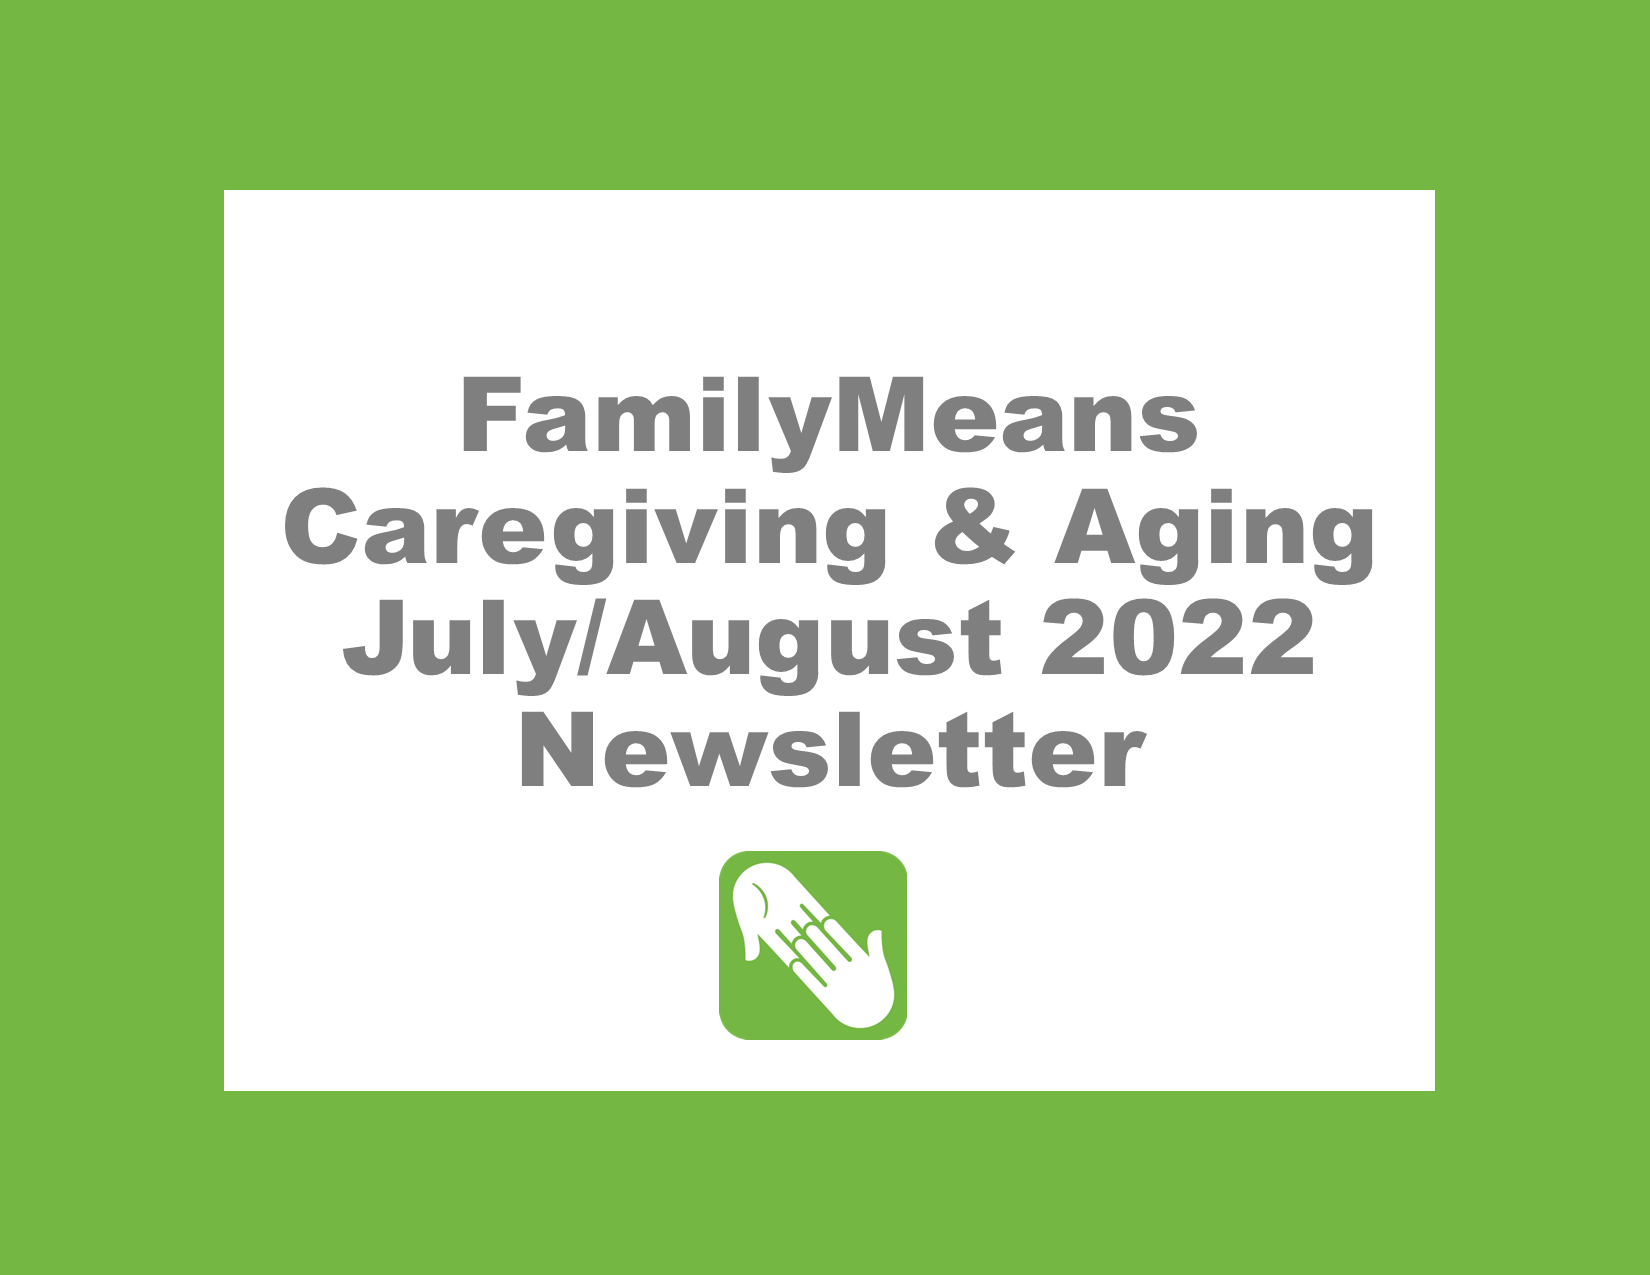 Caregiving & Aging July/August Newsletter